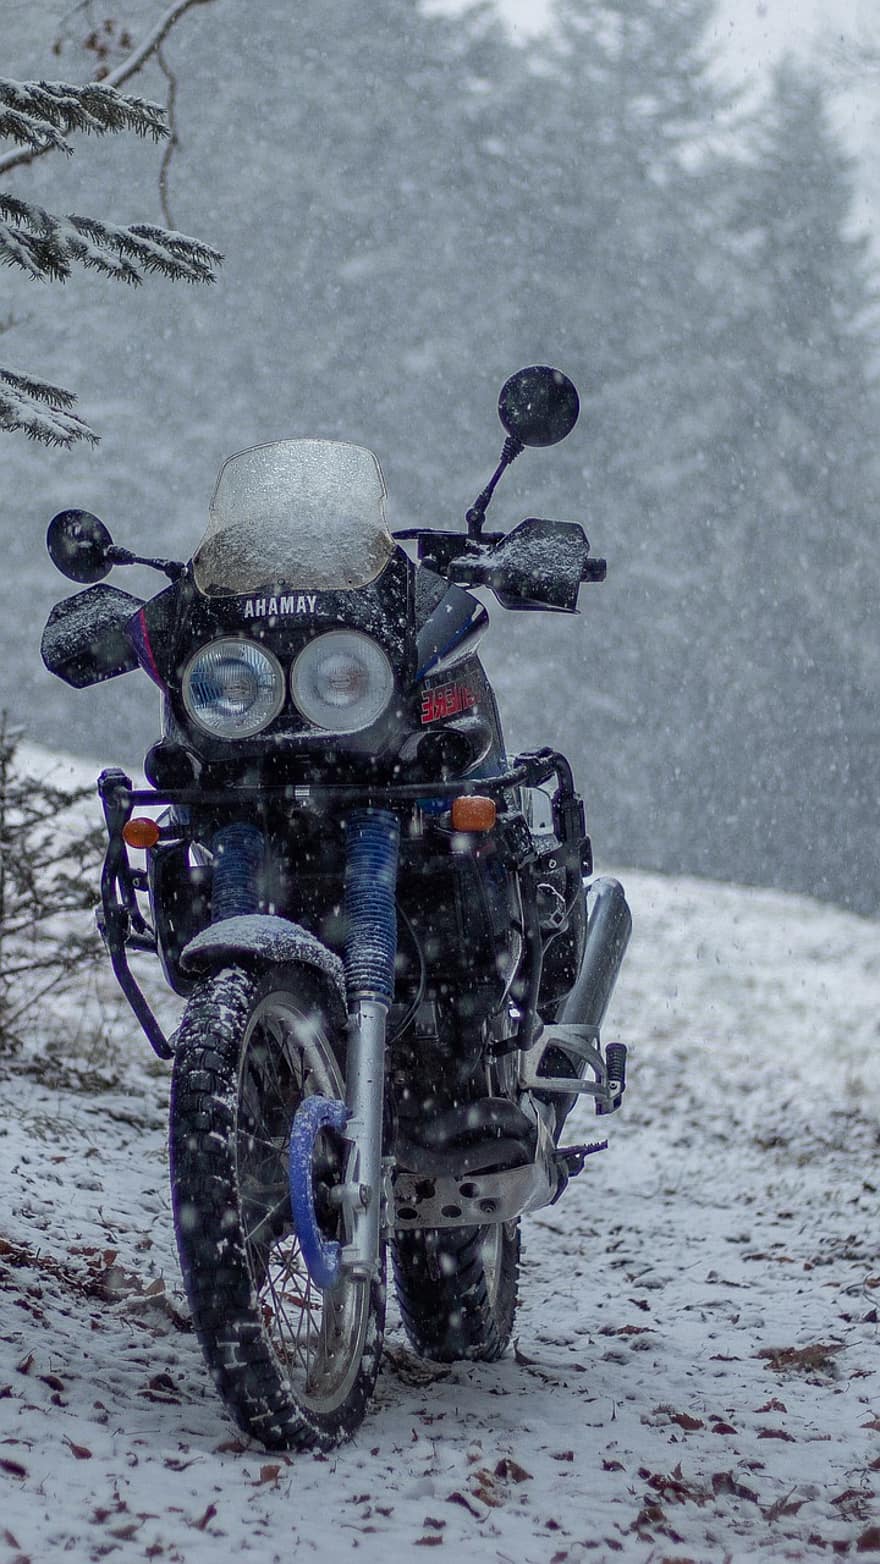 Motorbike, Winter, Season, Snow, motorcycle, sport, extreme sports, speed, transportation, adventure, engine